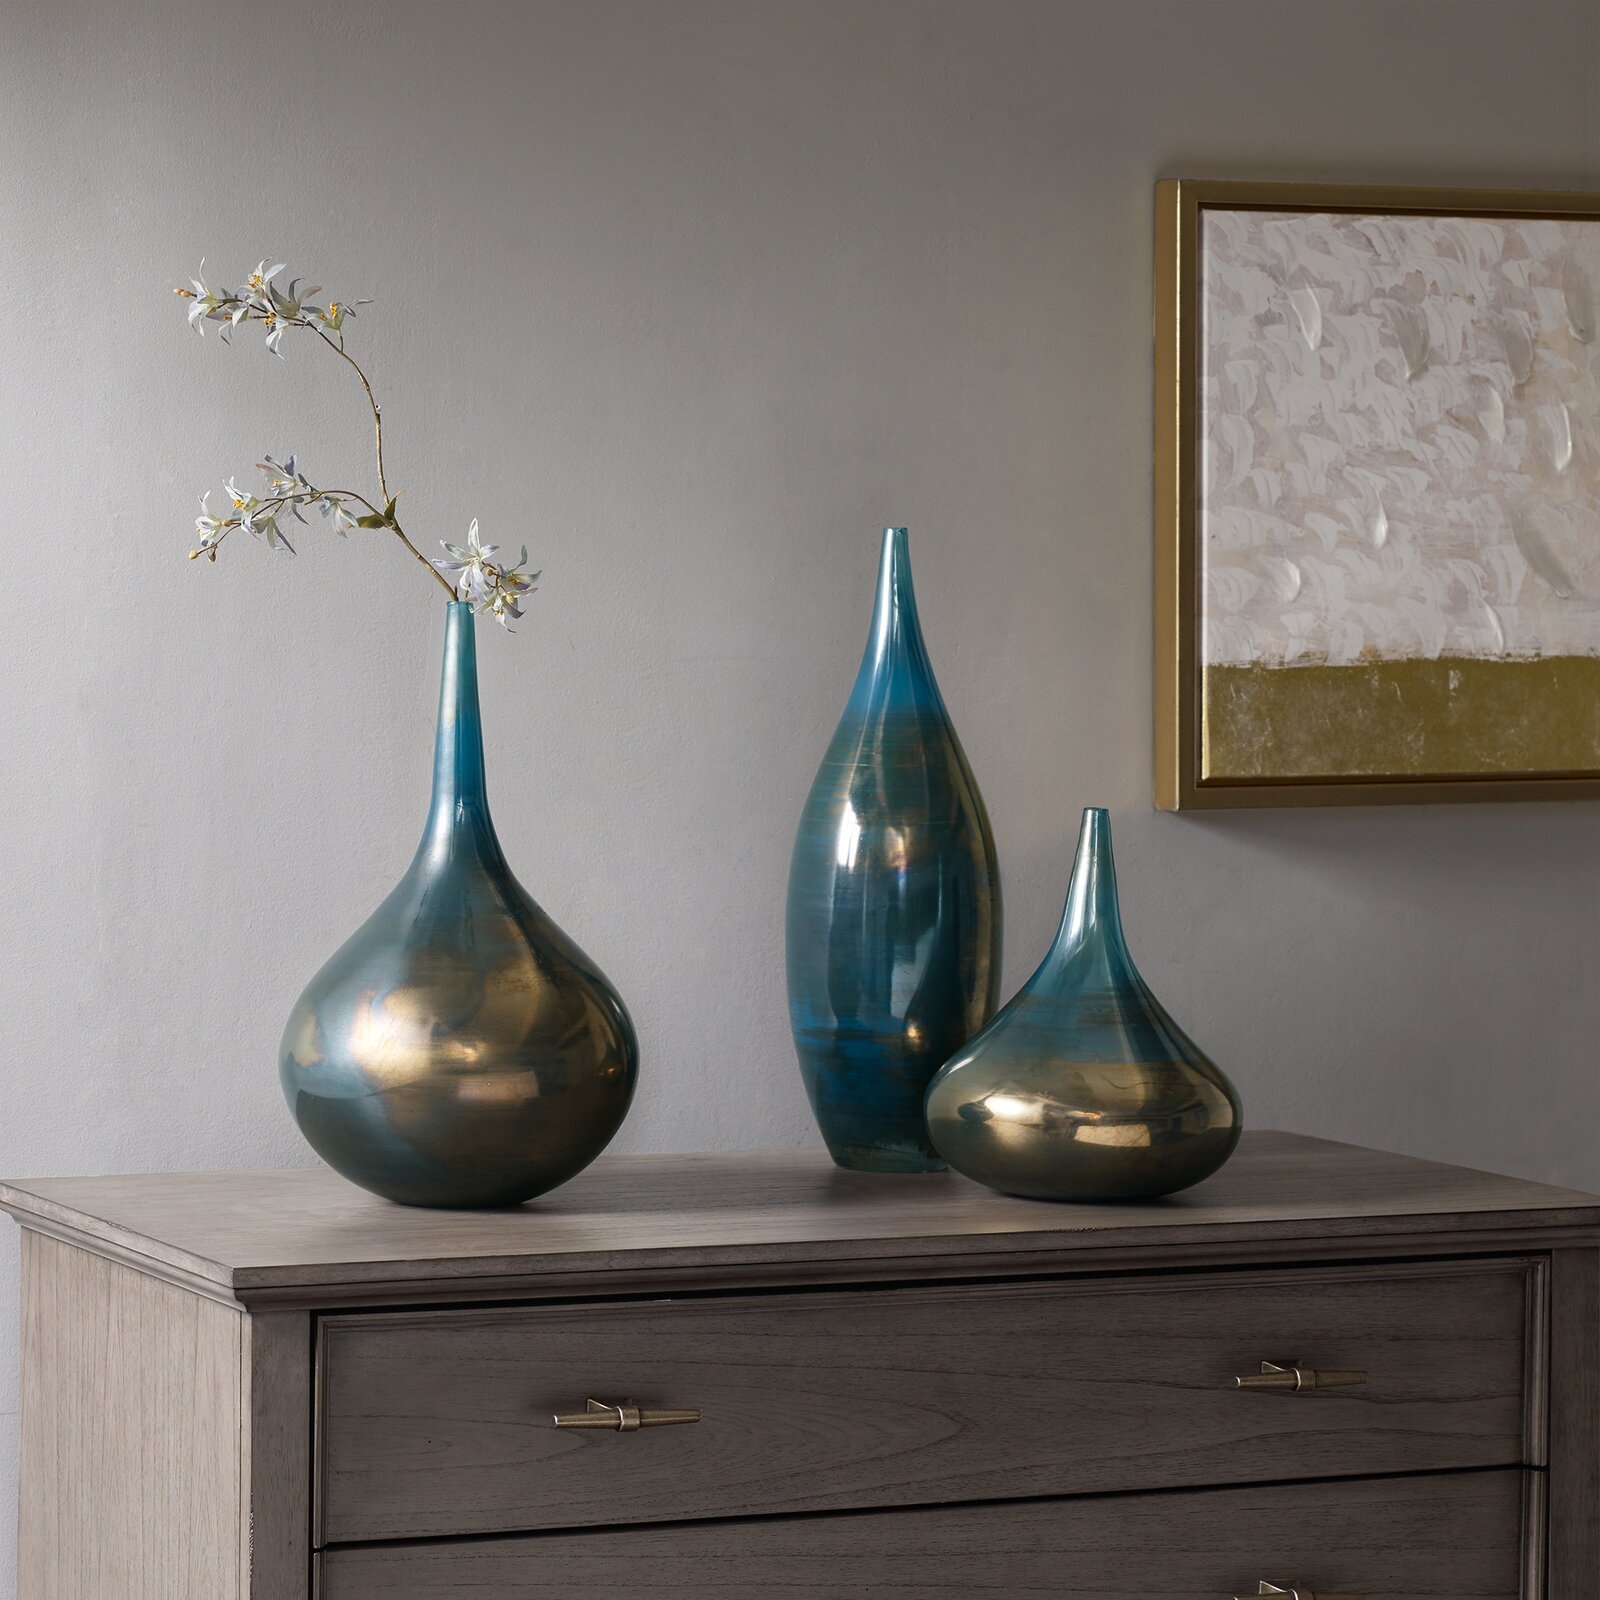 3 Piece Aurora Glass Table Vase Set - Image 2